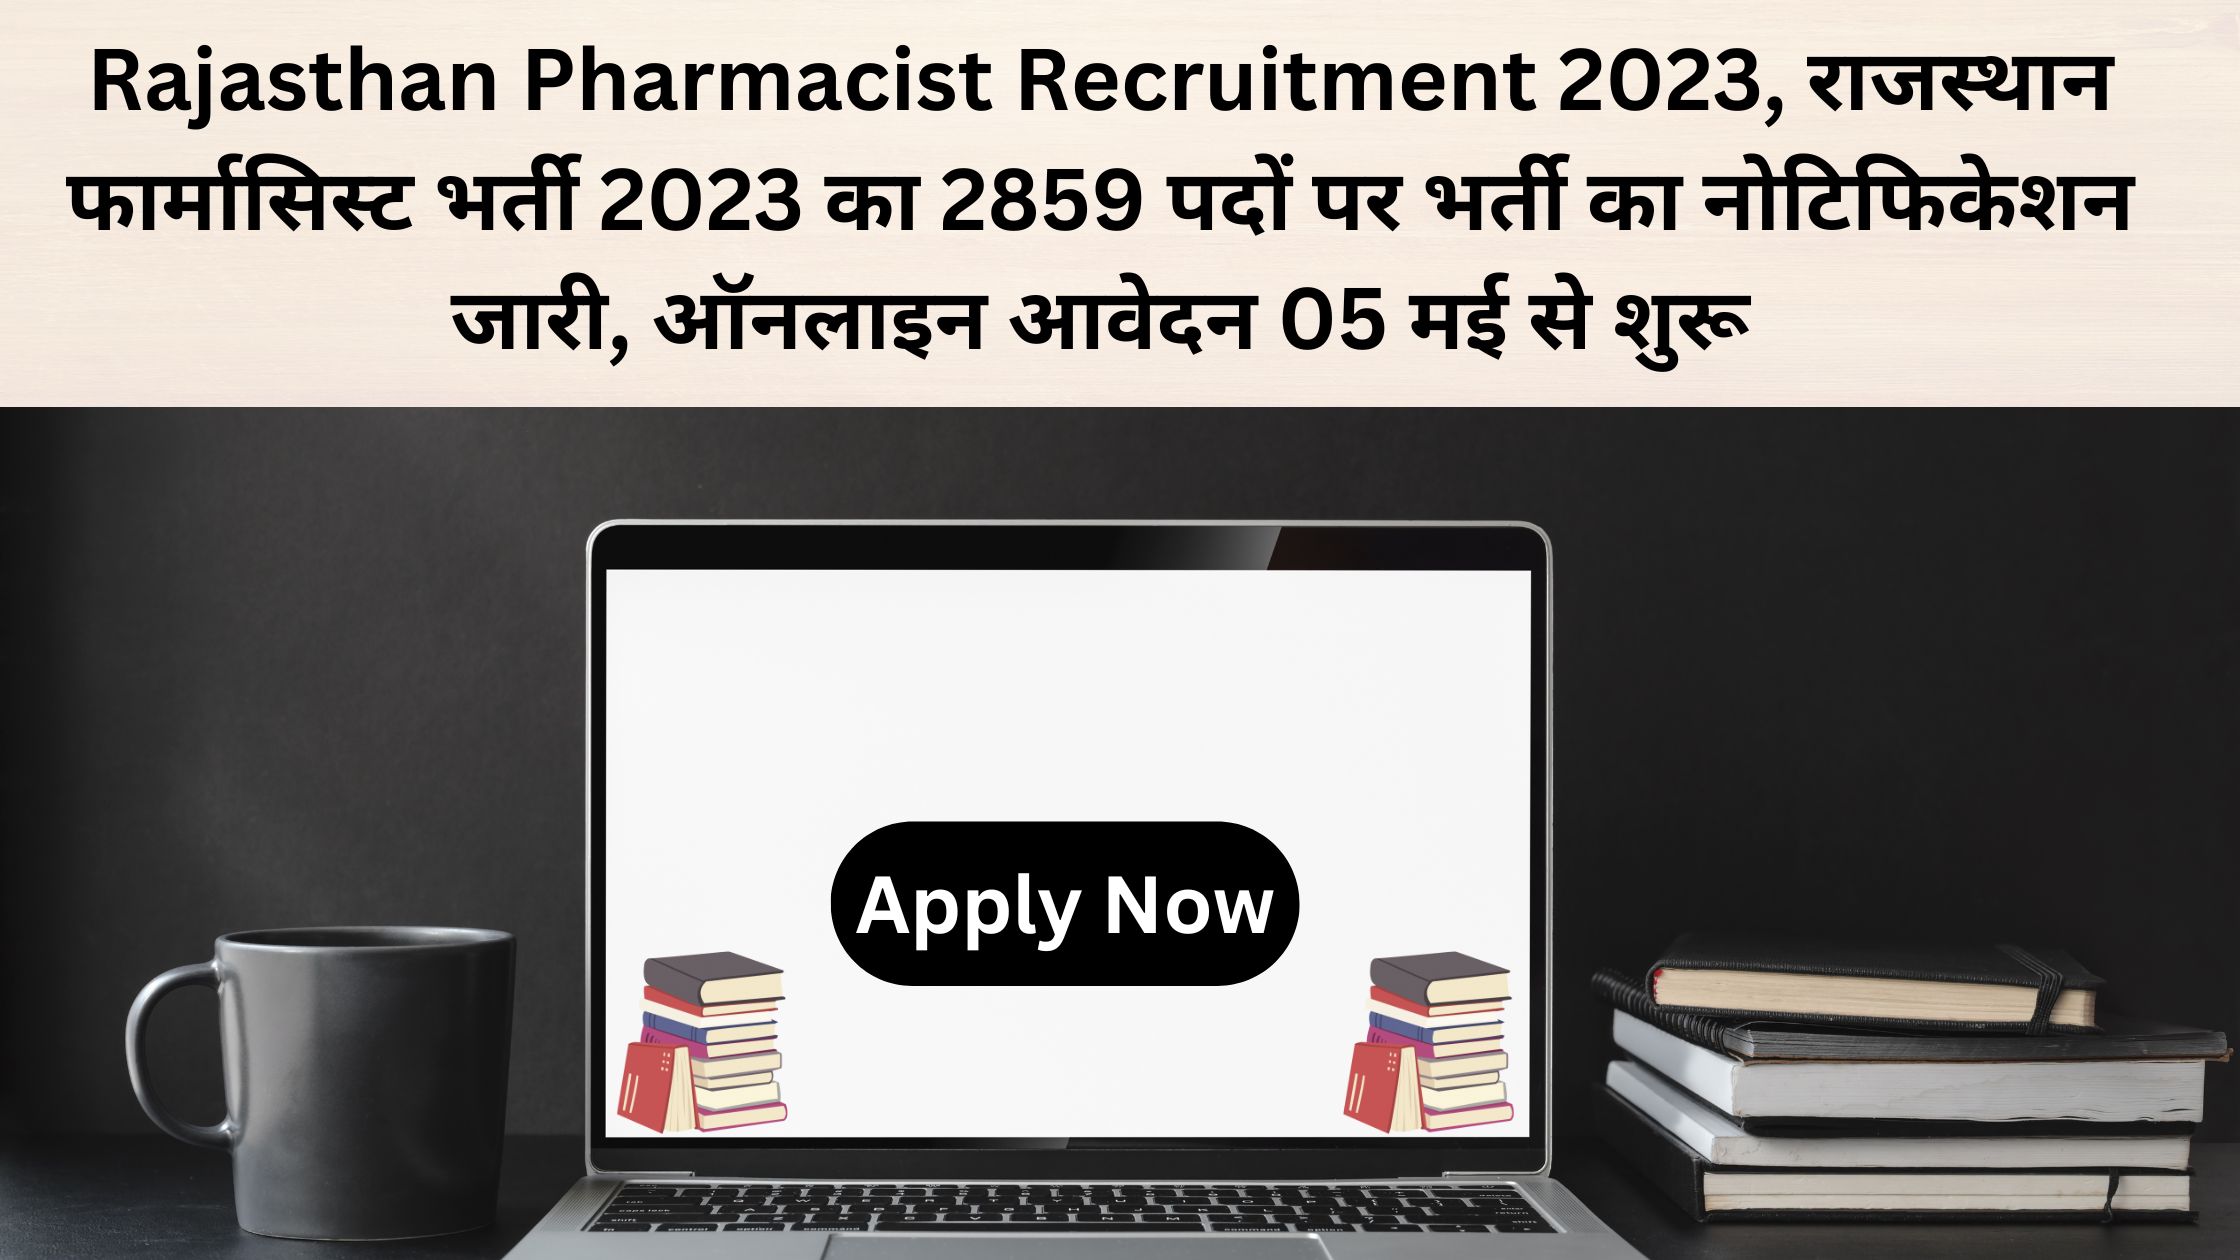 Rajasthan Pharmacist Recruitment 2023 Apply Now